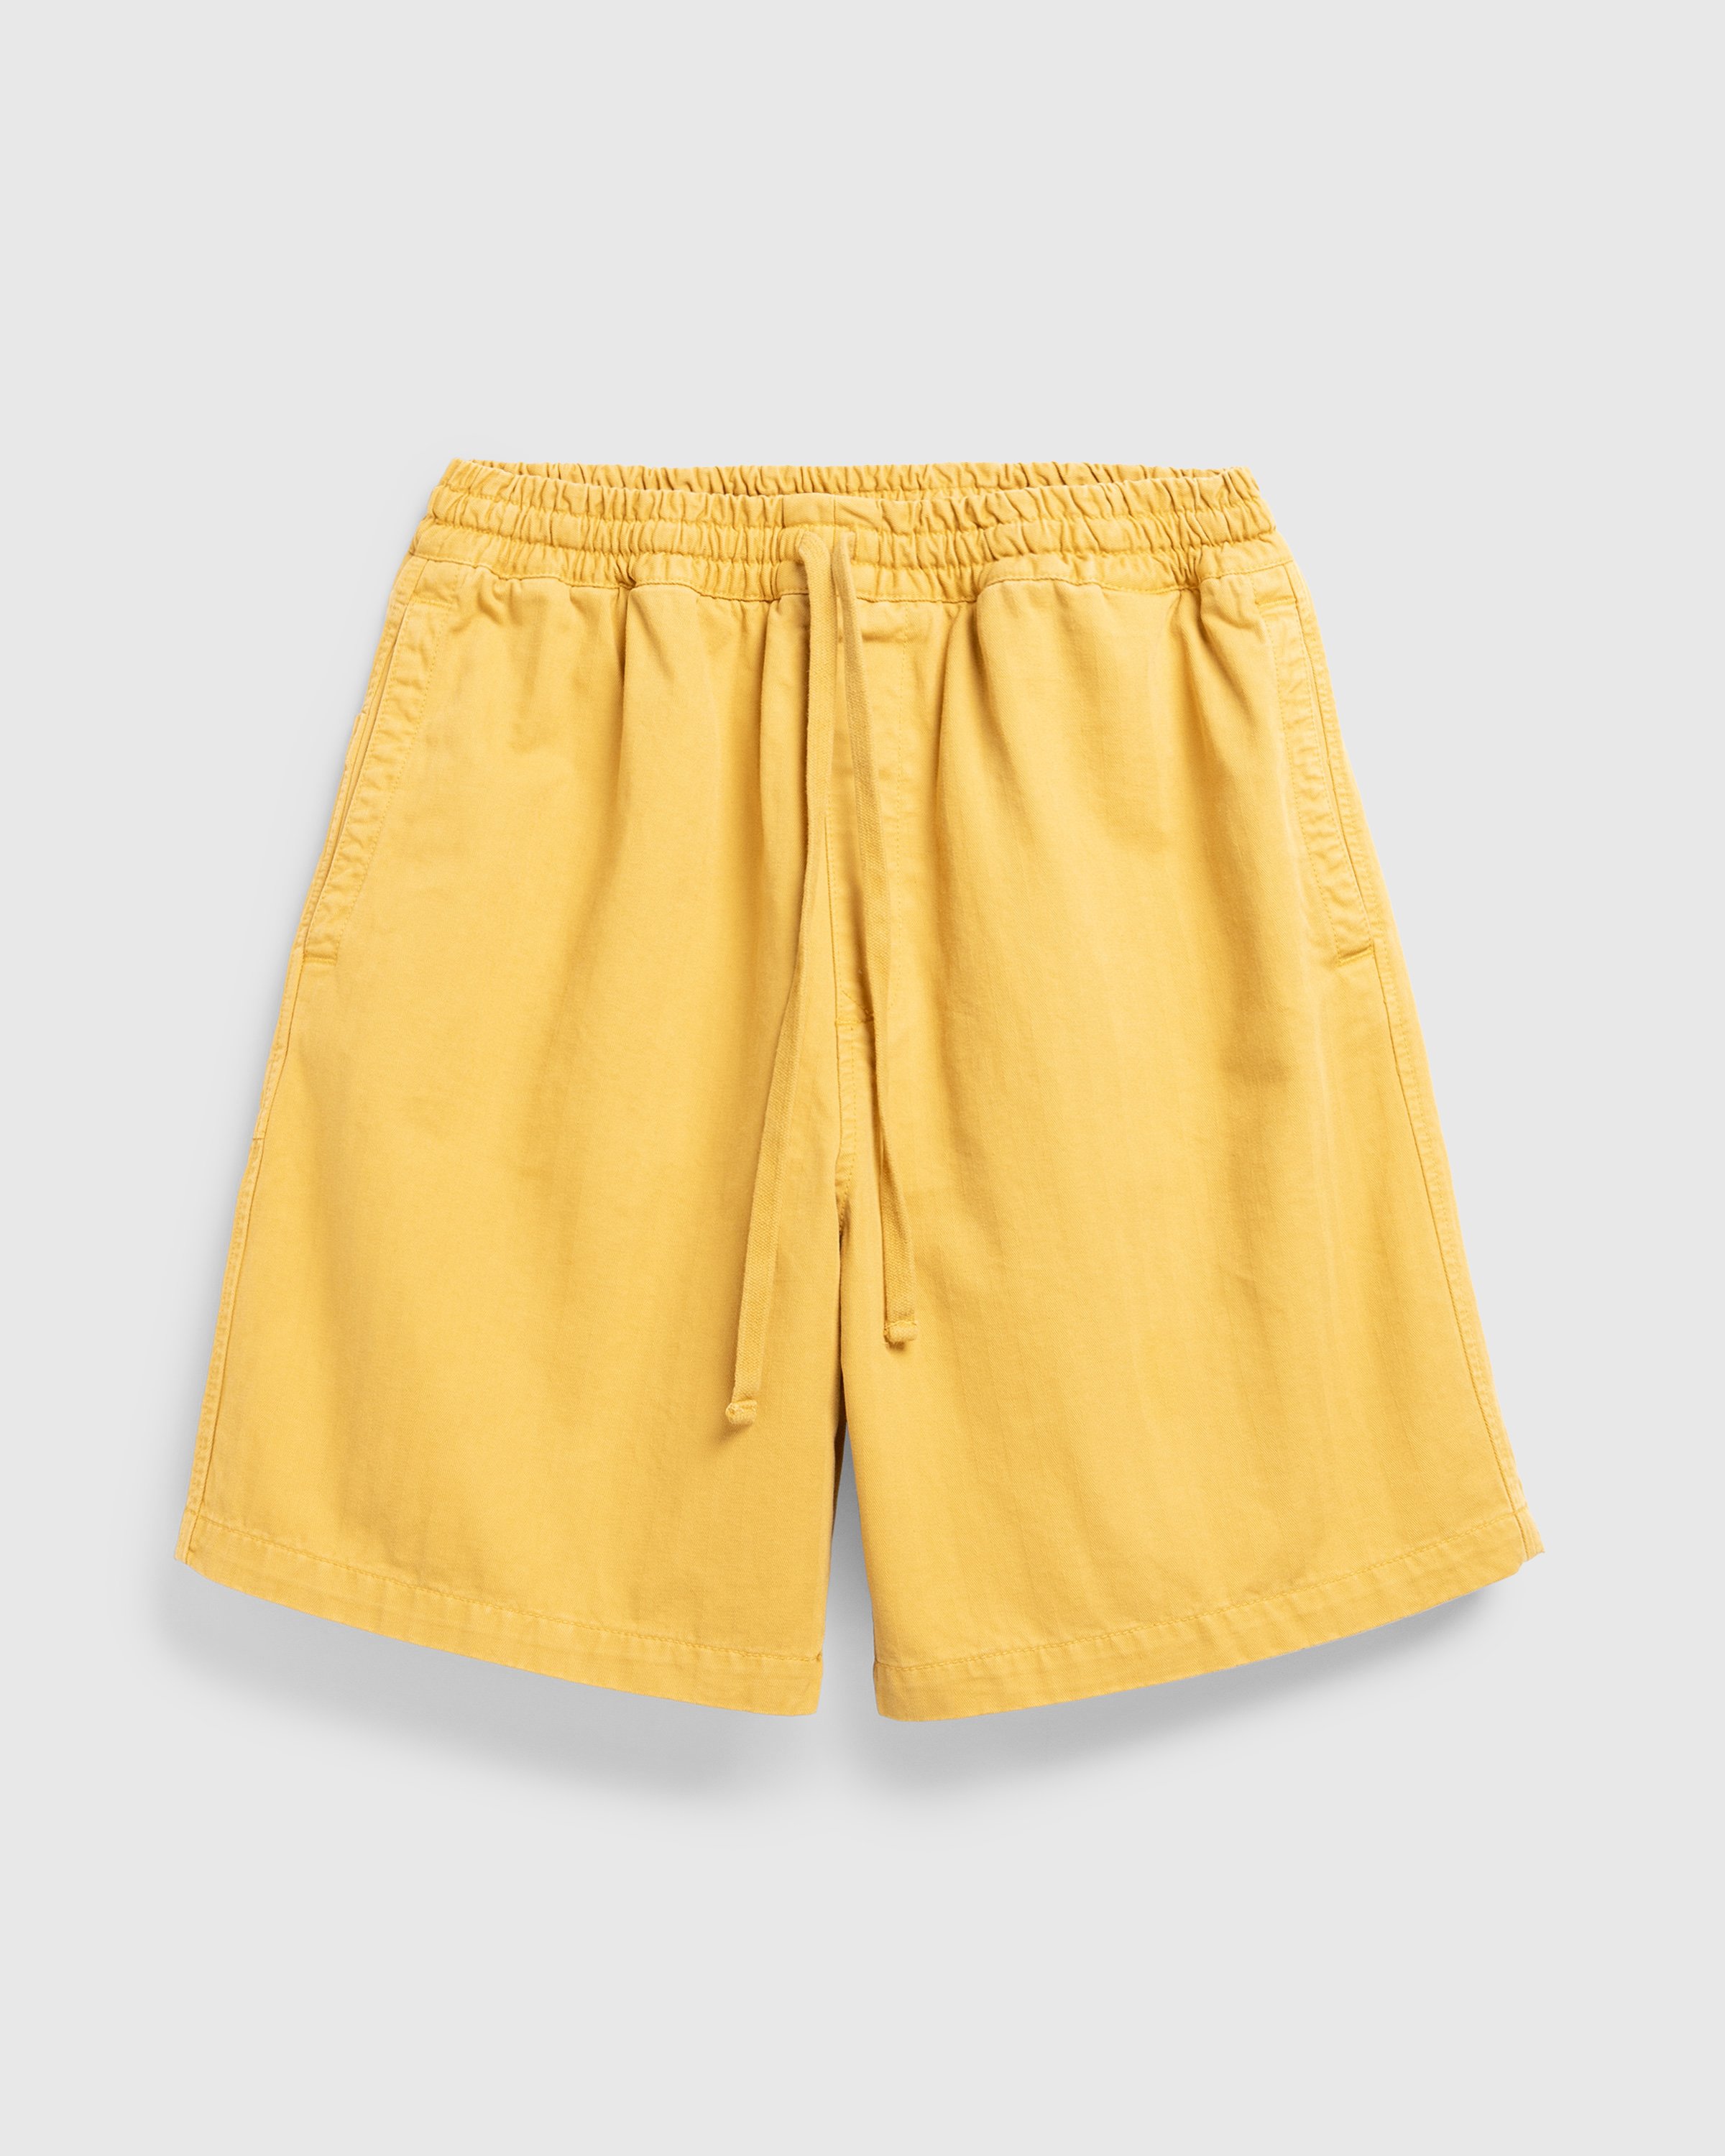 Carhartt WIP - Rainer Short Sunray /garment dyed - Clothing - Yellow - Image 1